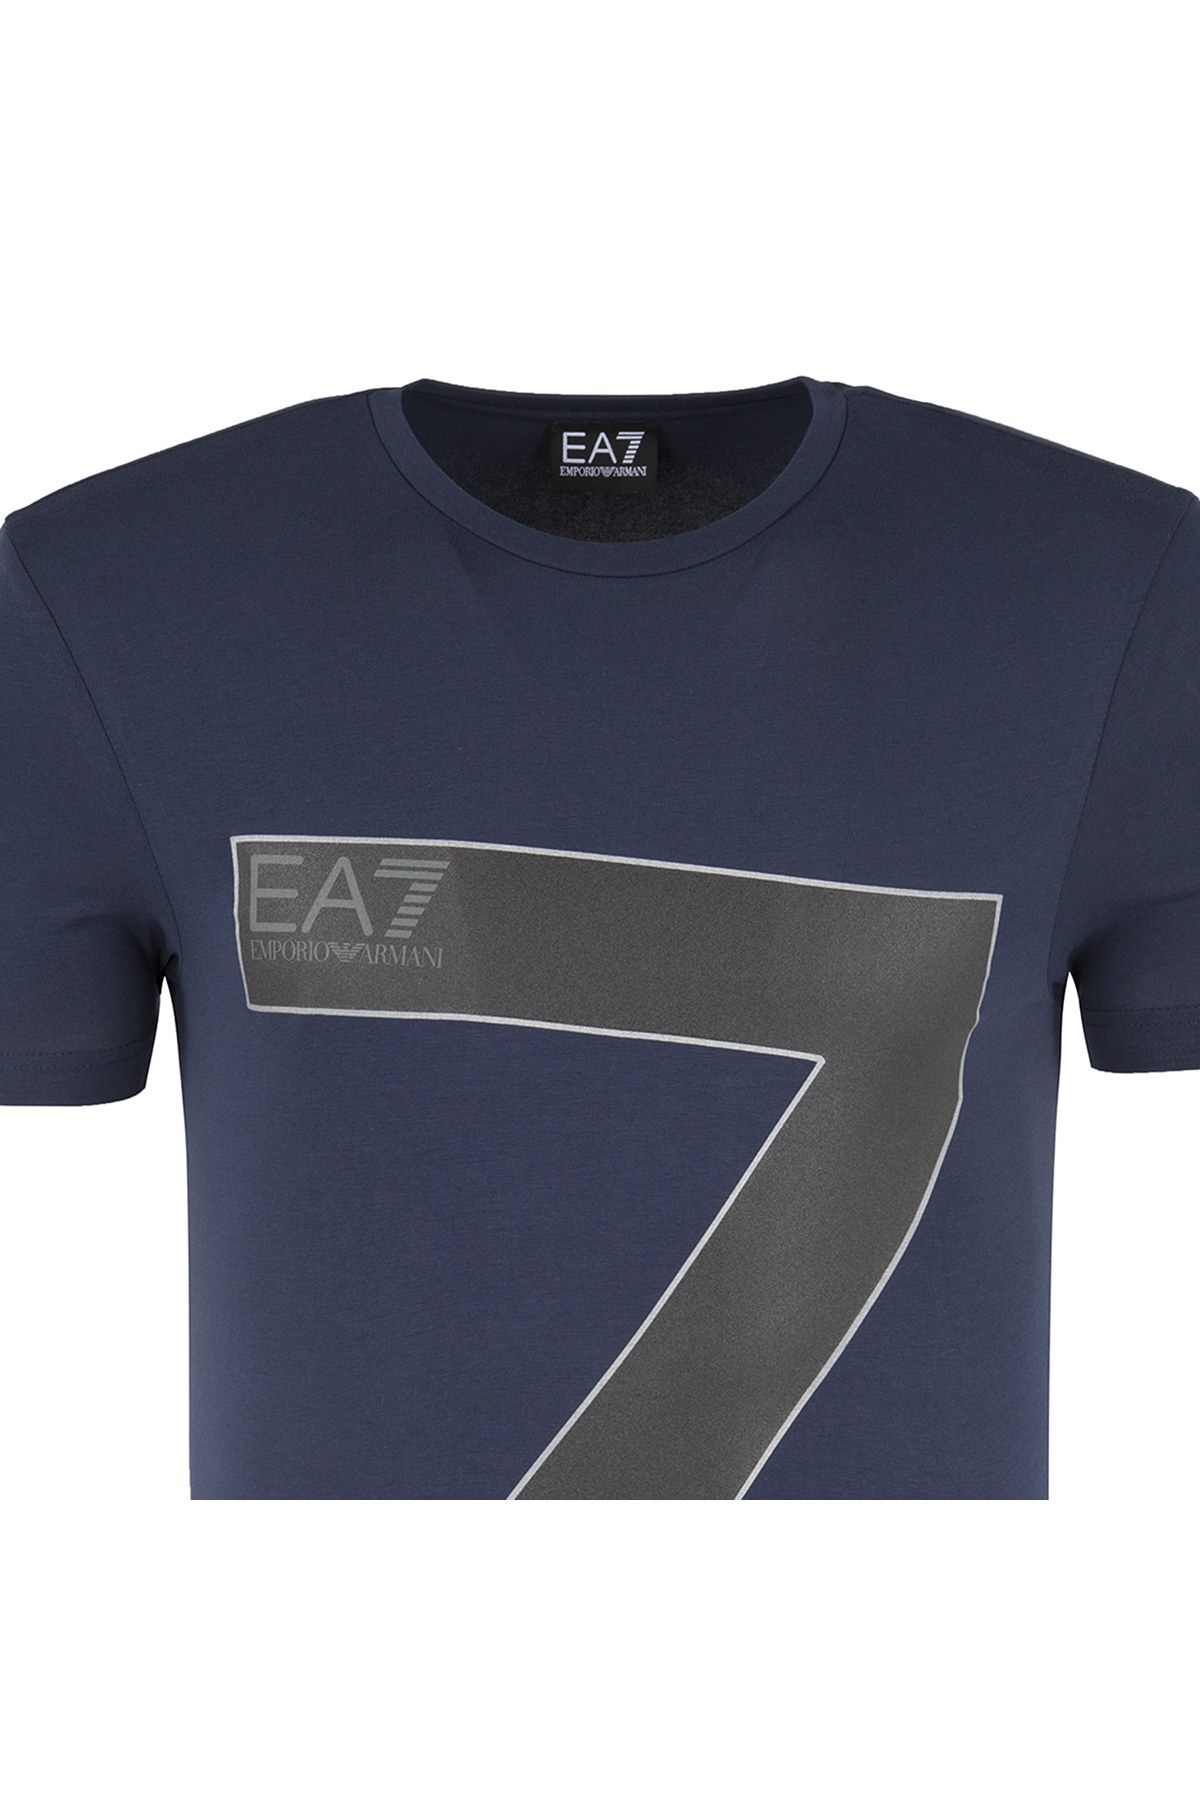 EA7 T SHIRT Erkek T Shirt 6ZPT31 PJ18Z 1554 LACİVERT